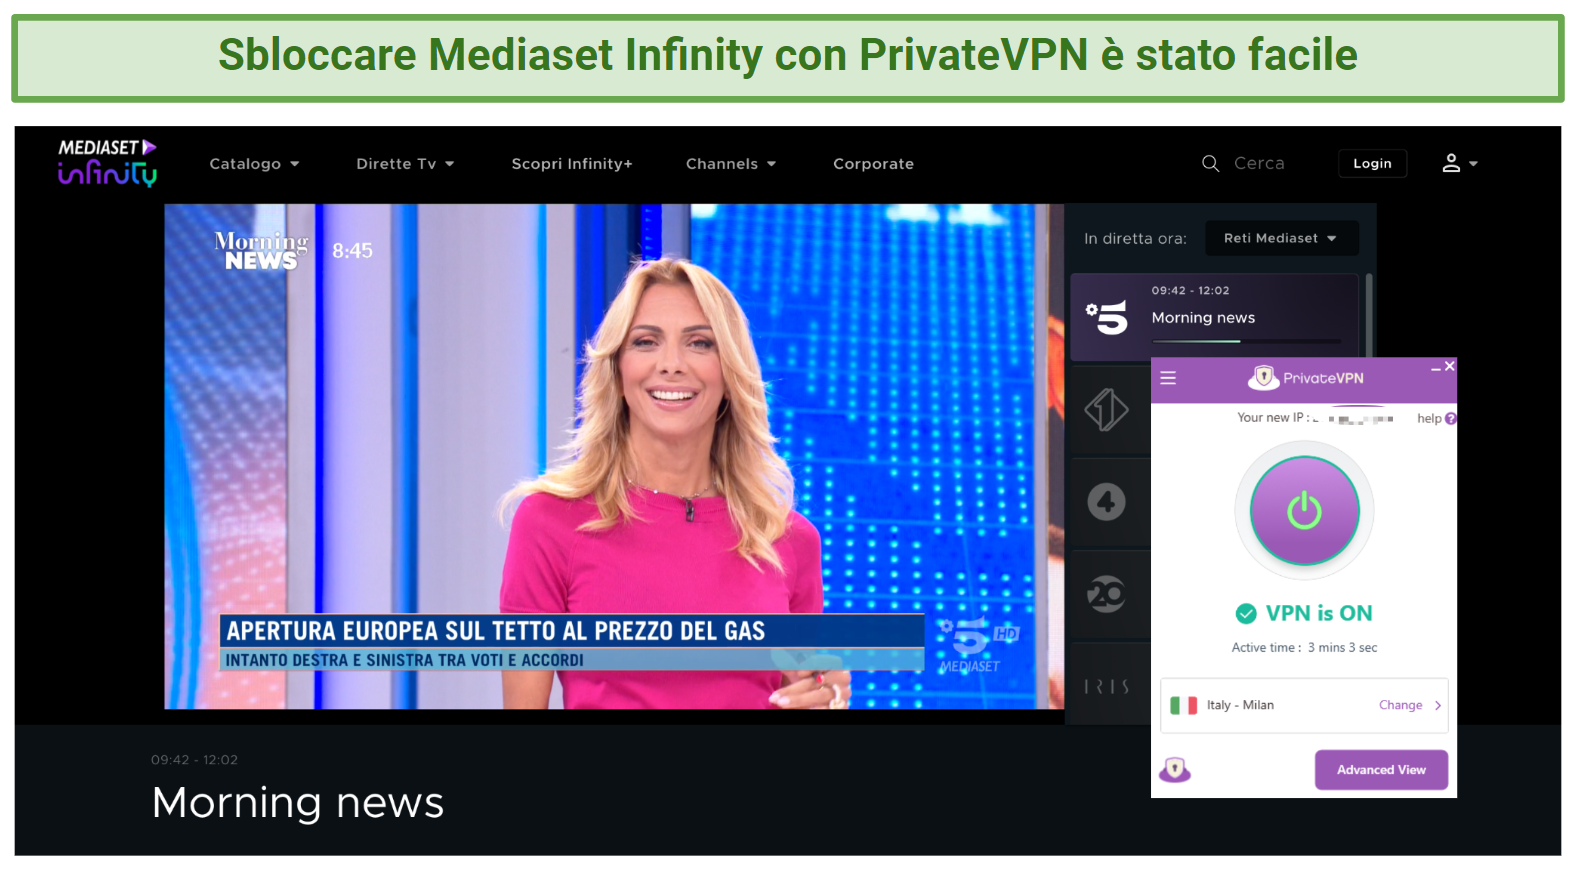 Screenshot of PrivateVPN unblocking Mediaset Infinity outside Italy